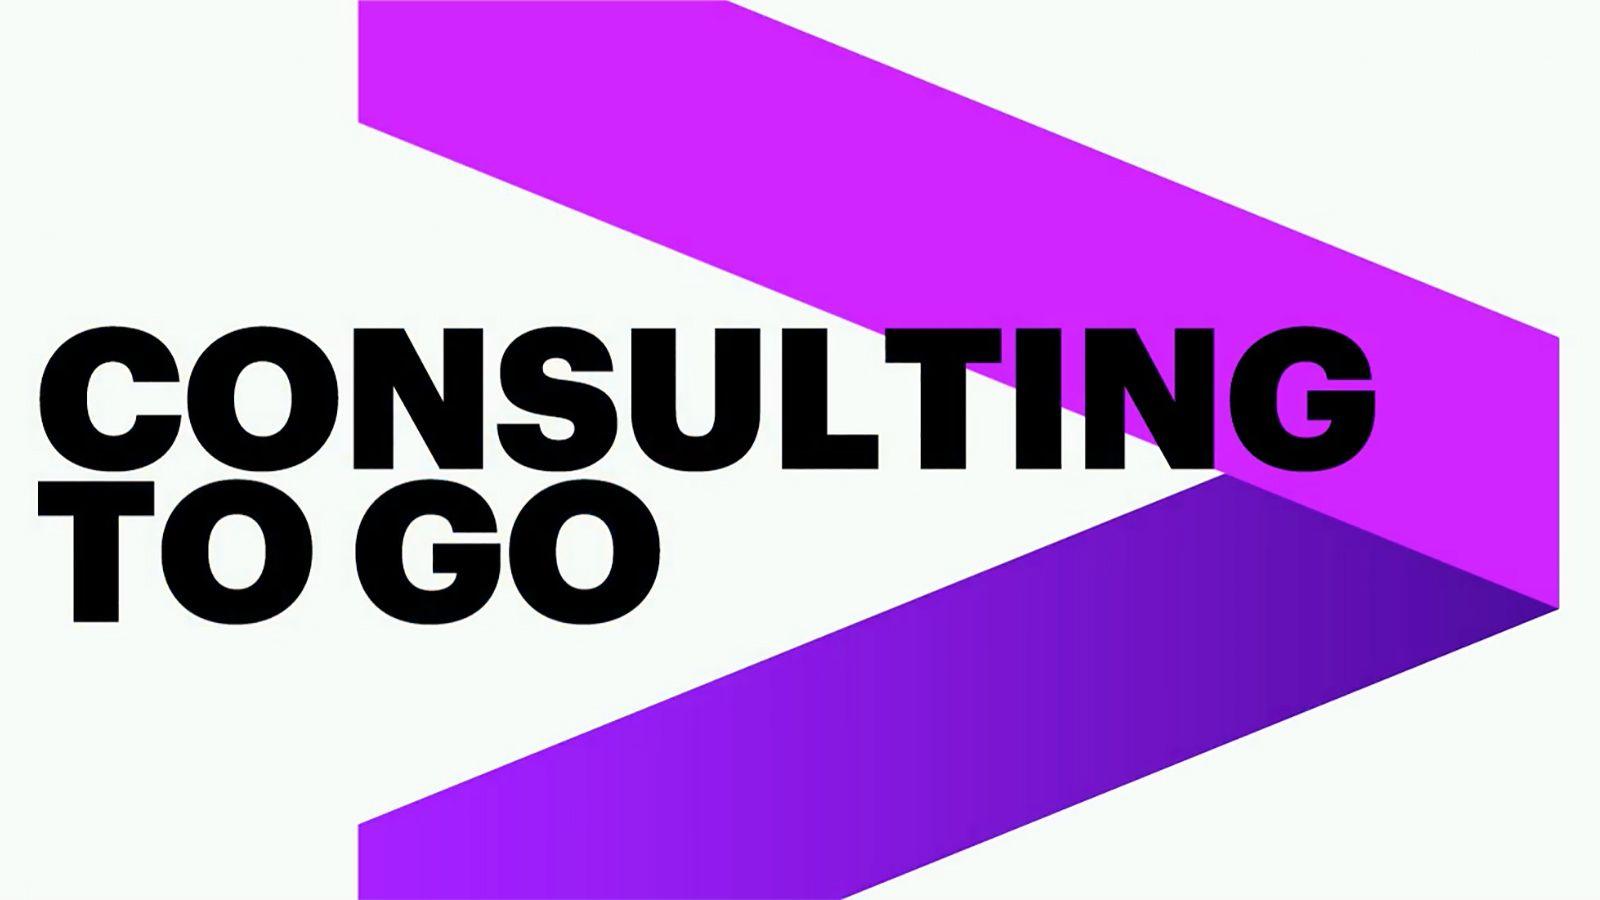 Accenture Consulting Logo - Consulting To Go I Accenture